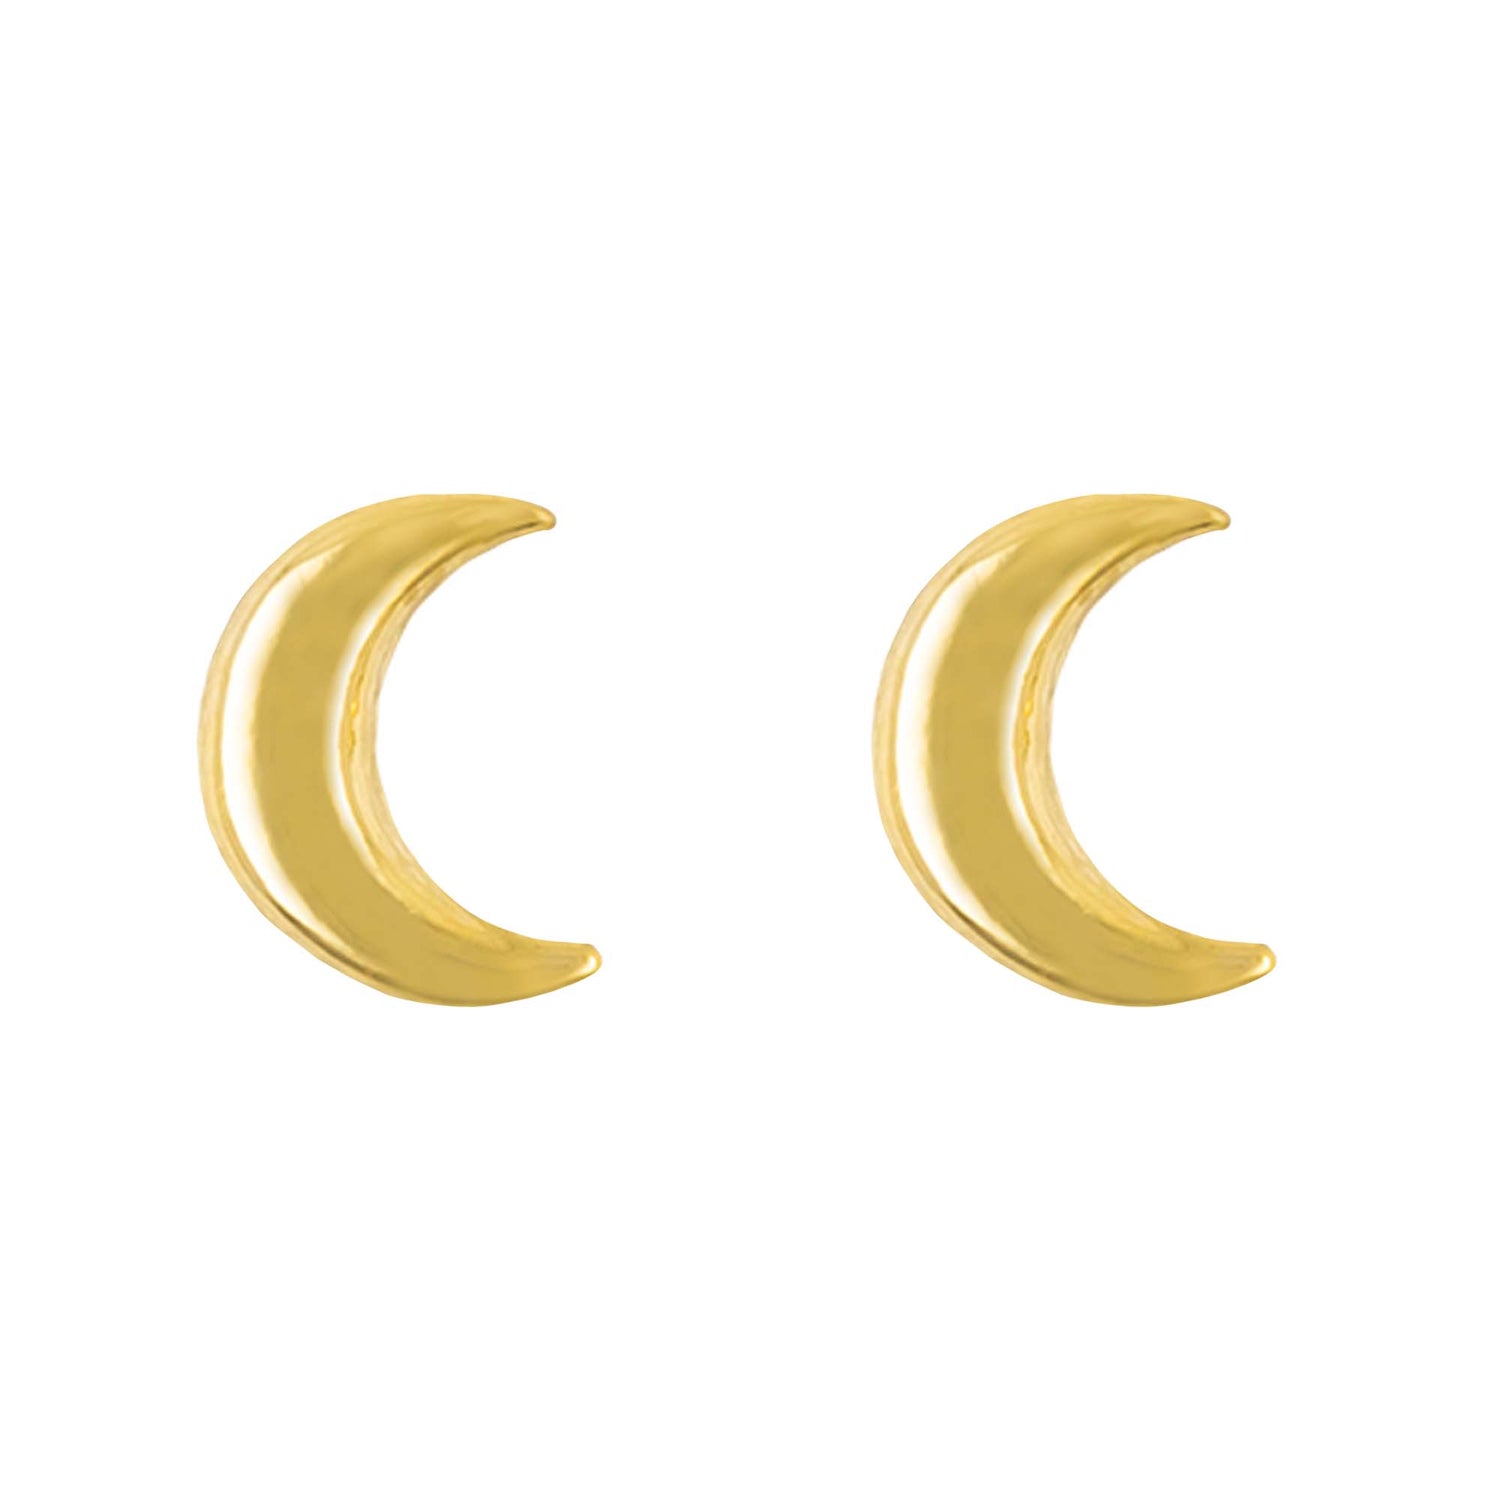 Earring Crescent Moon